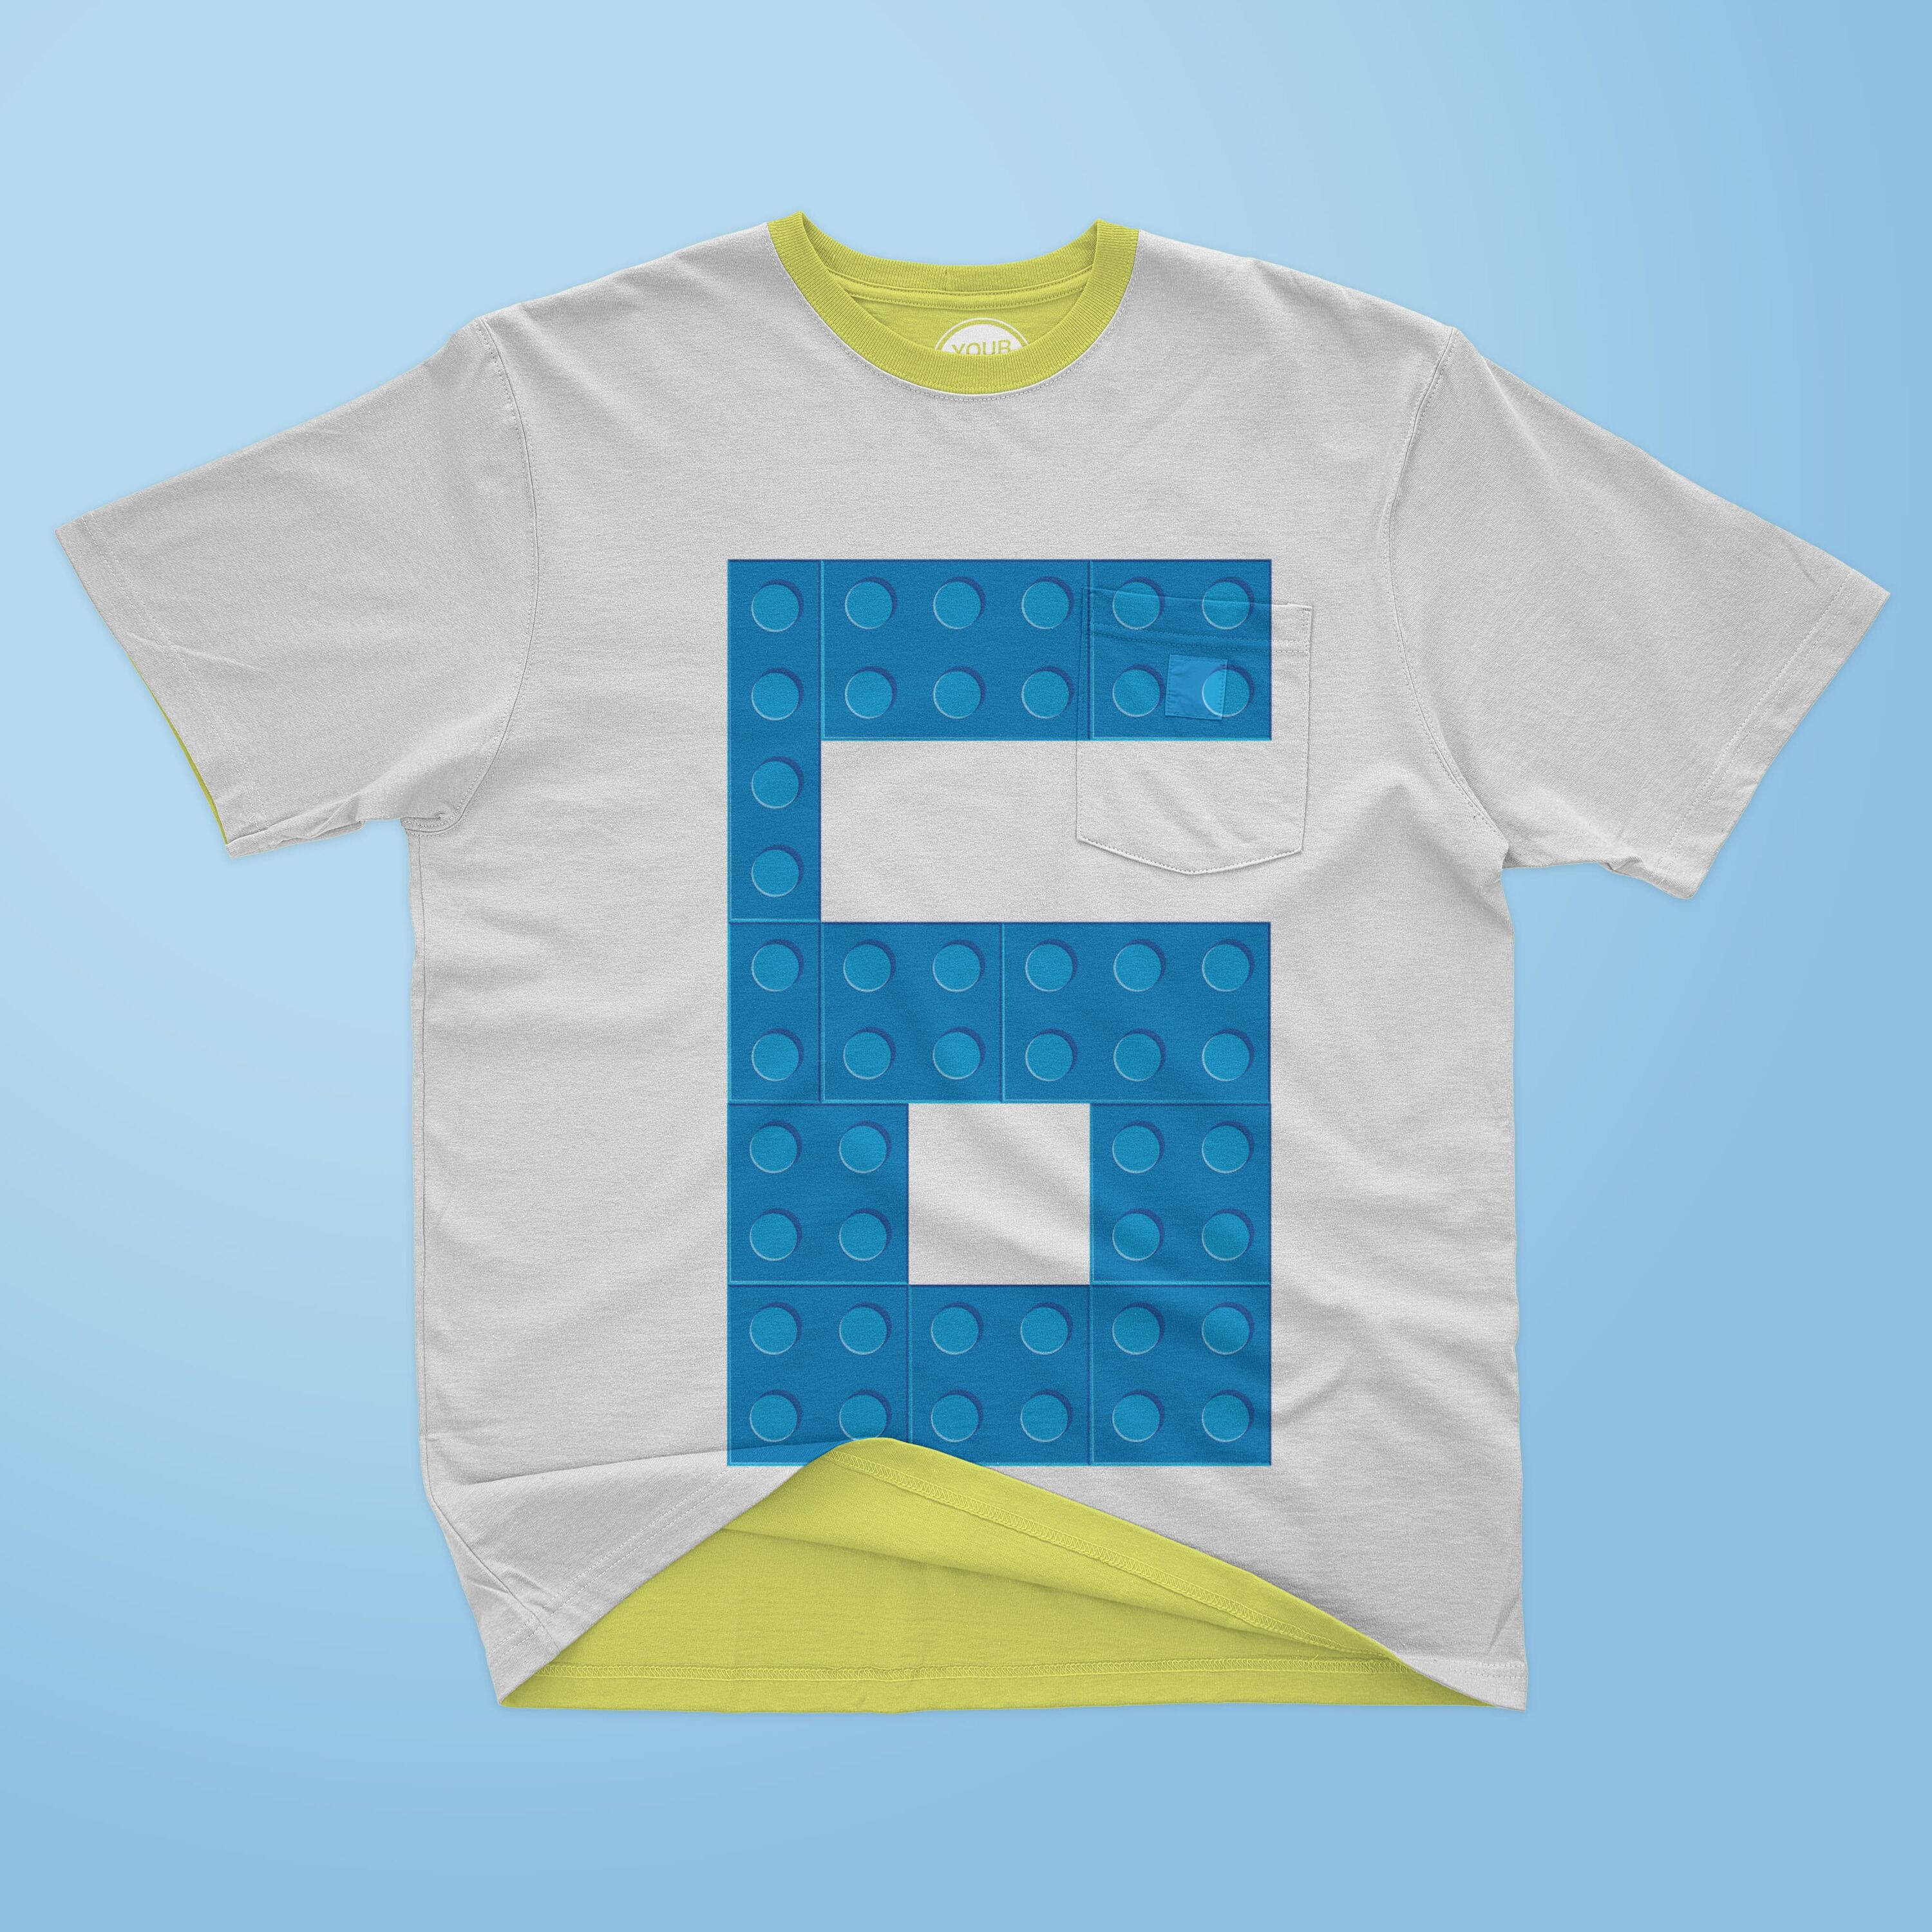 Number 6 made from blue lego bricks - t-shirt design.